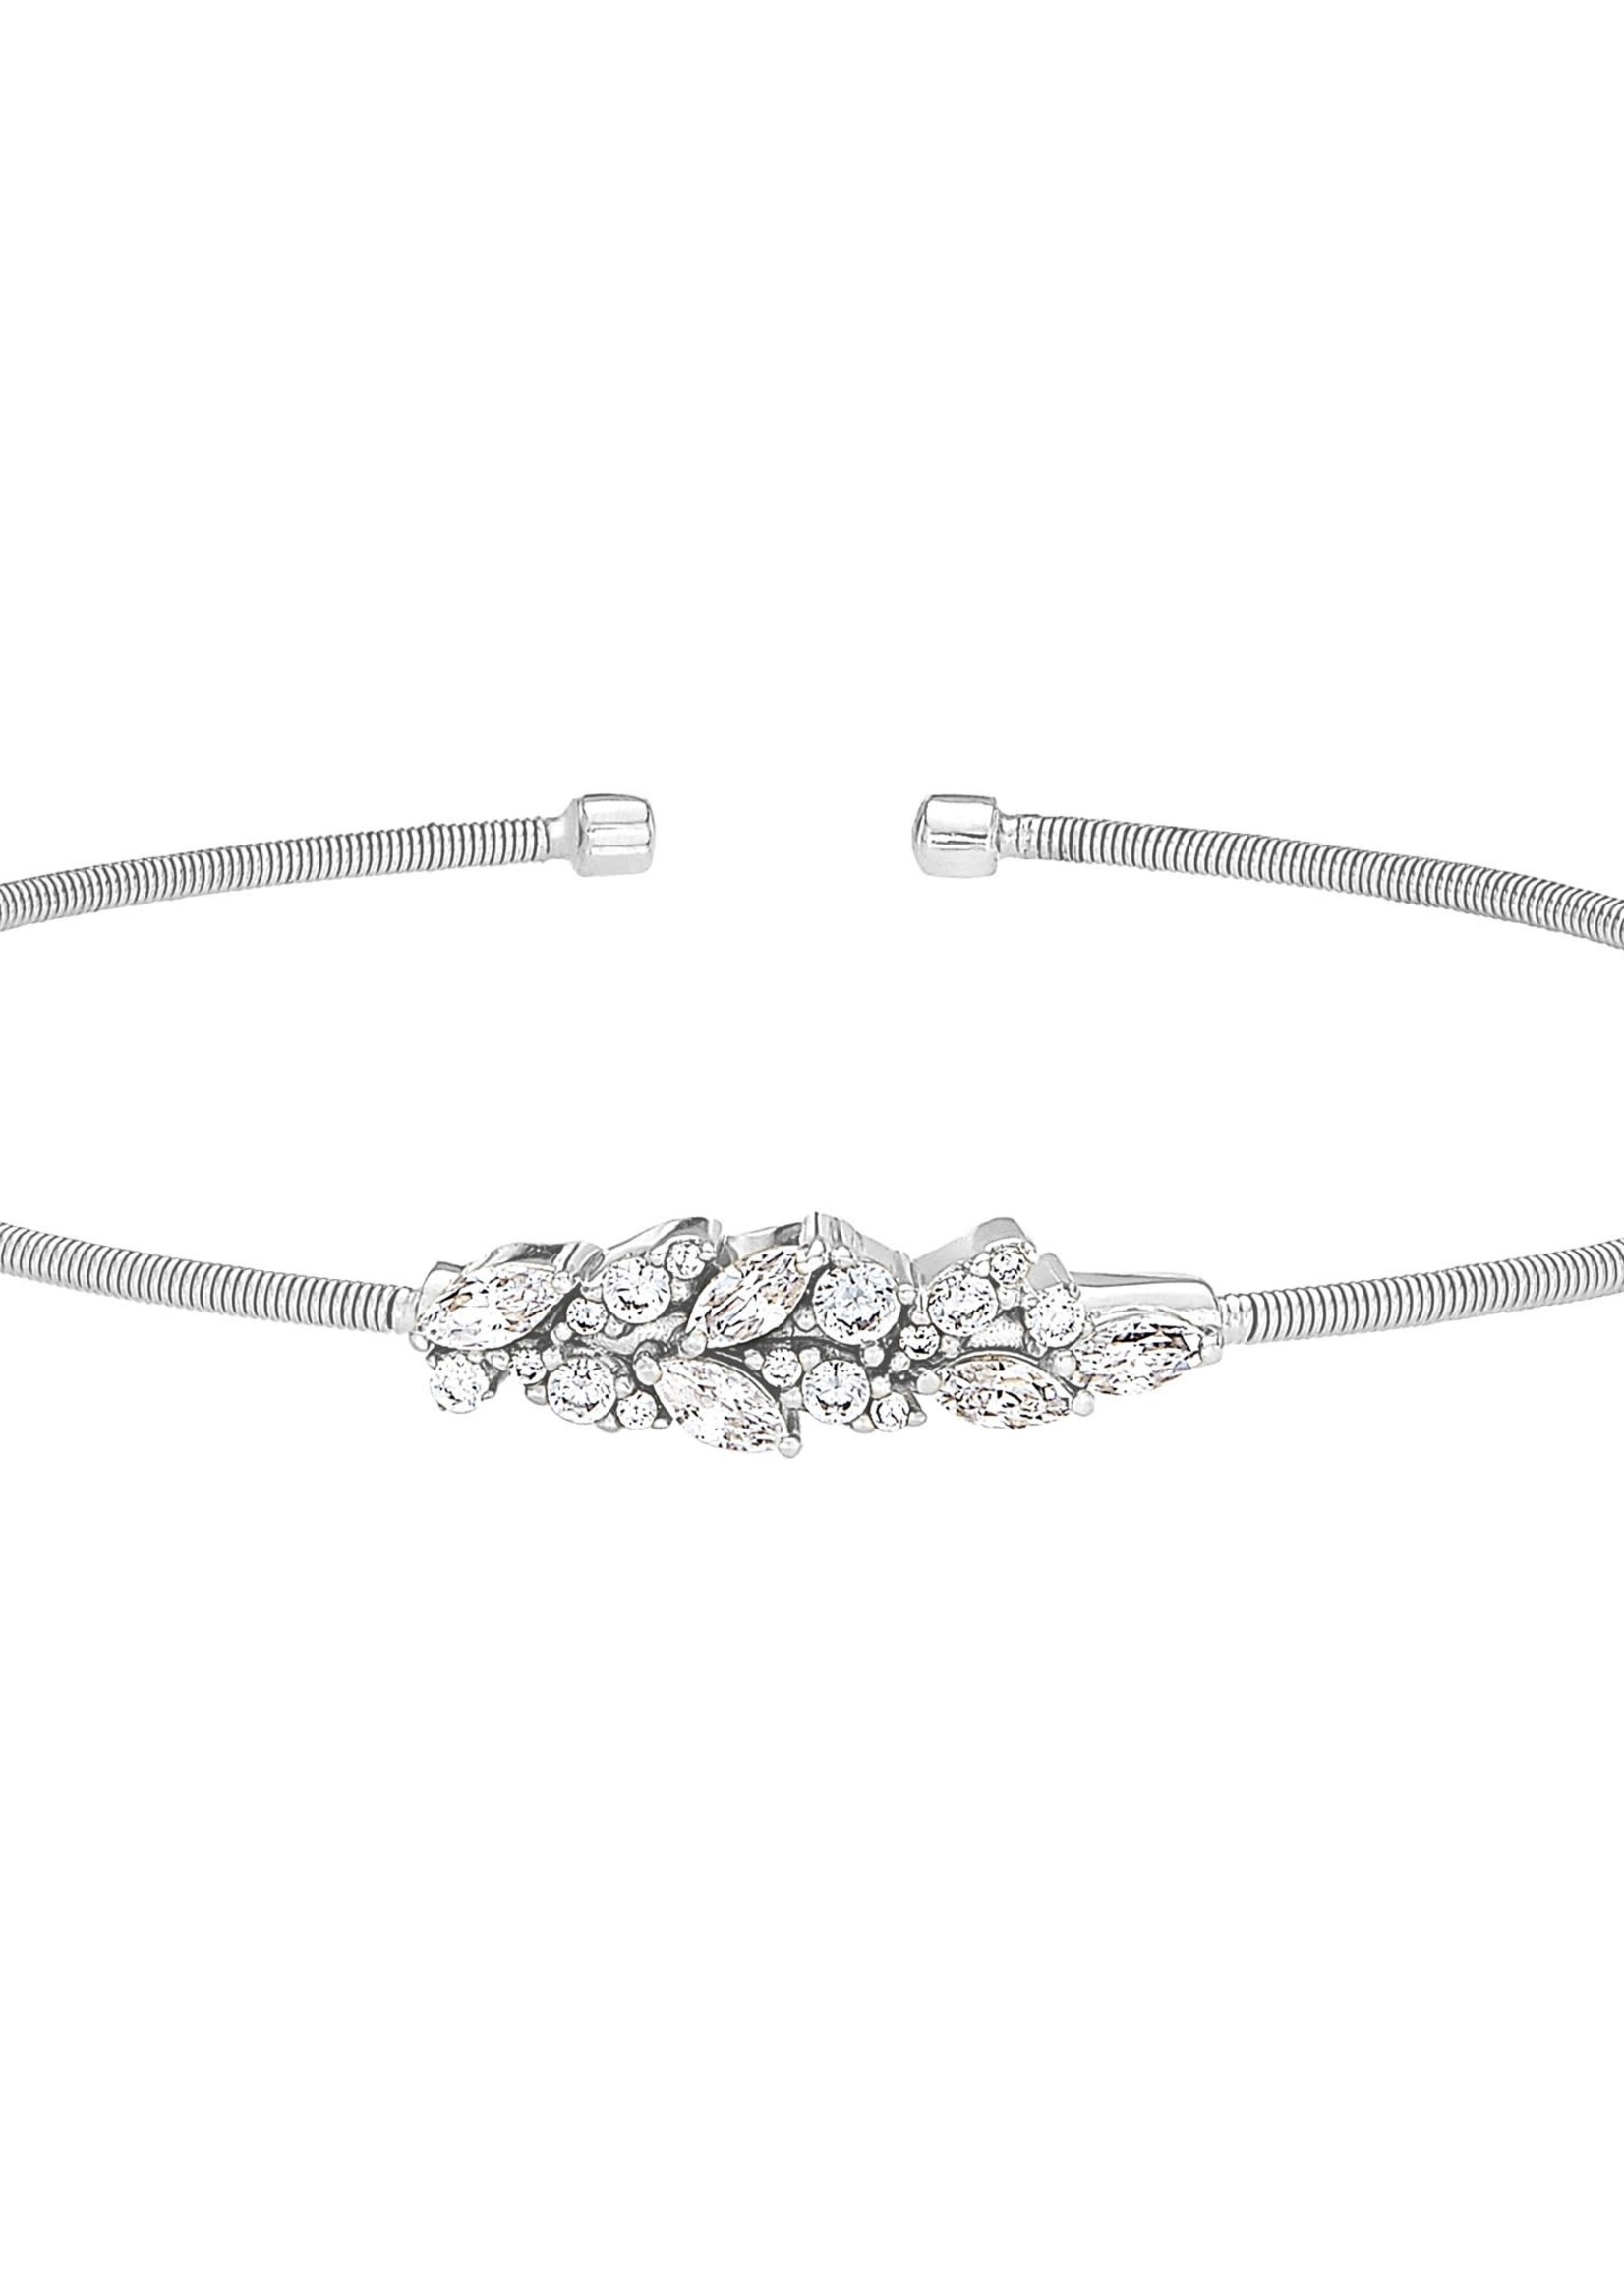 KELLY WATERS INC. Sterling Silver Leaf Pattern Simulated Diamond Cuff Bracelet